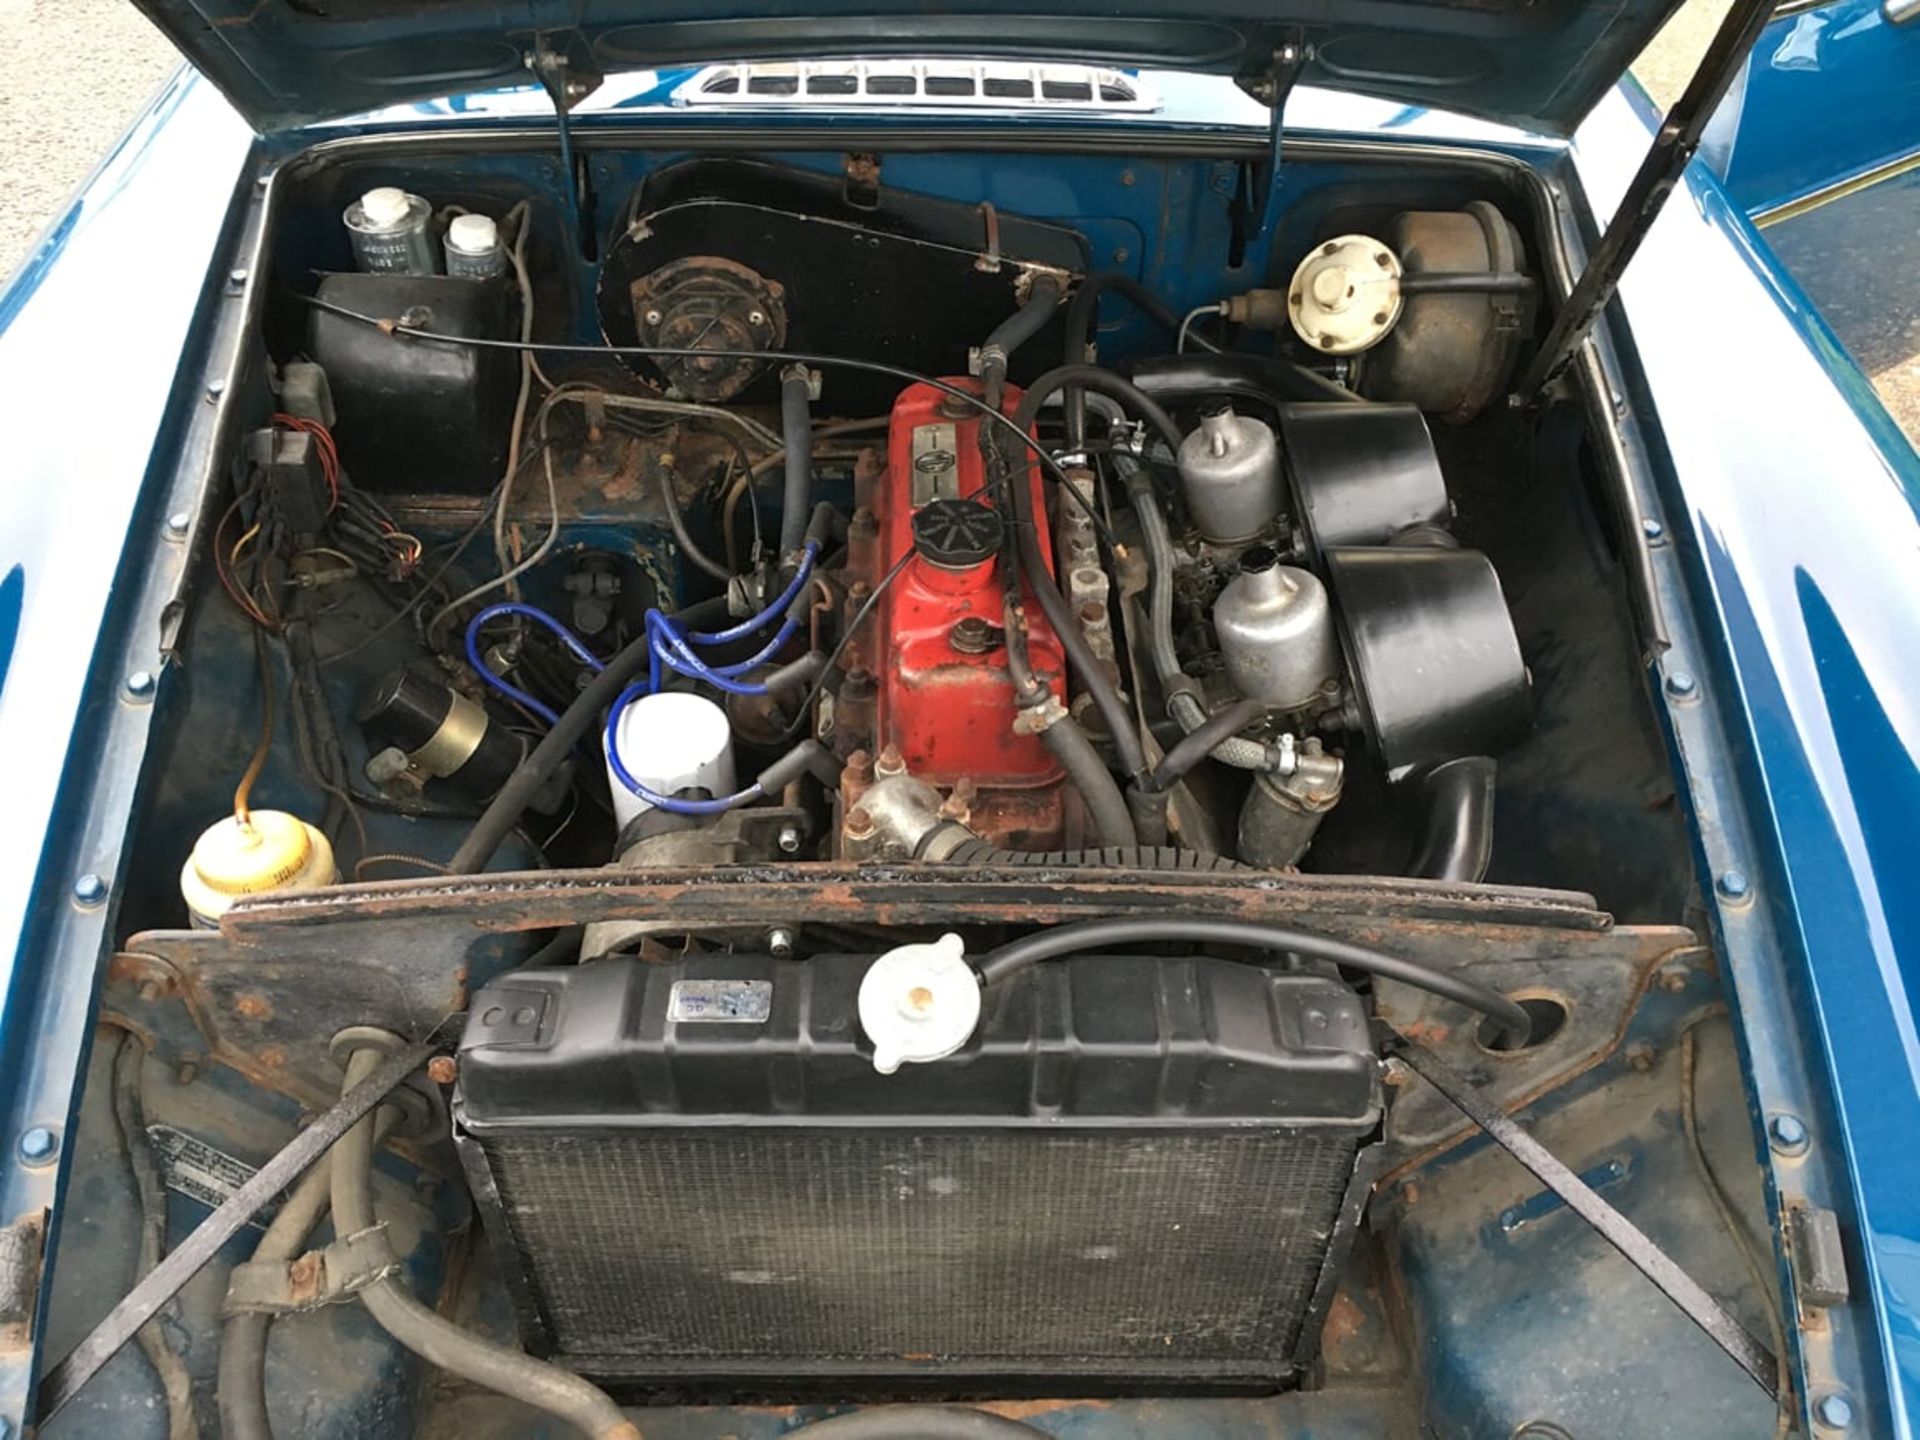 1971 MGB GT Chrome Bumper Teal Blue Overdrive - Image 15 of 30